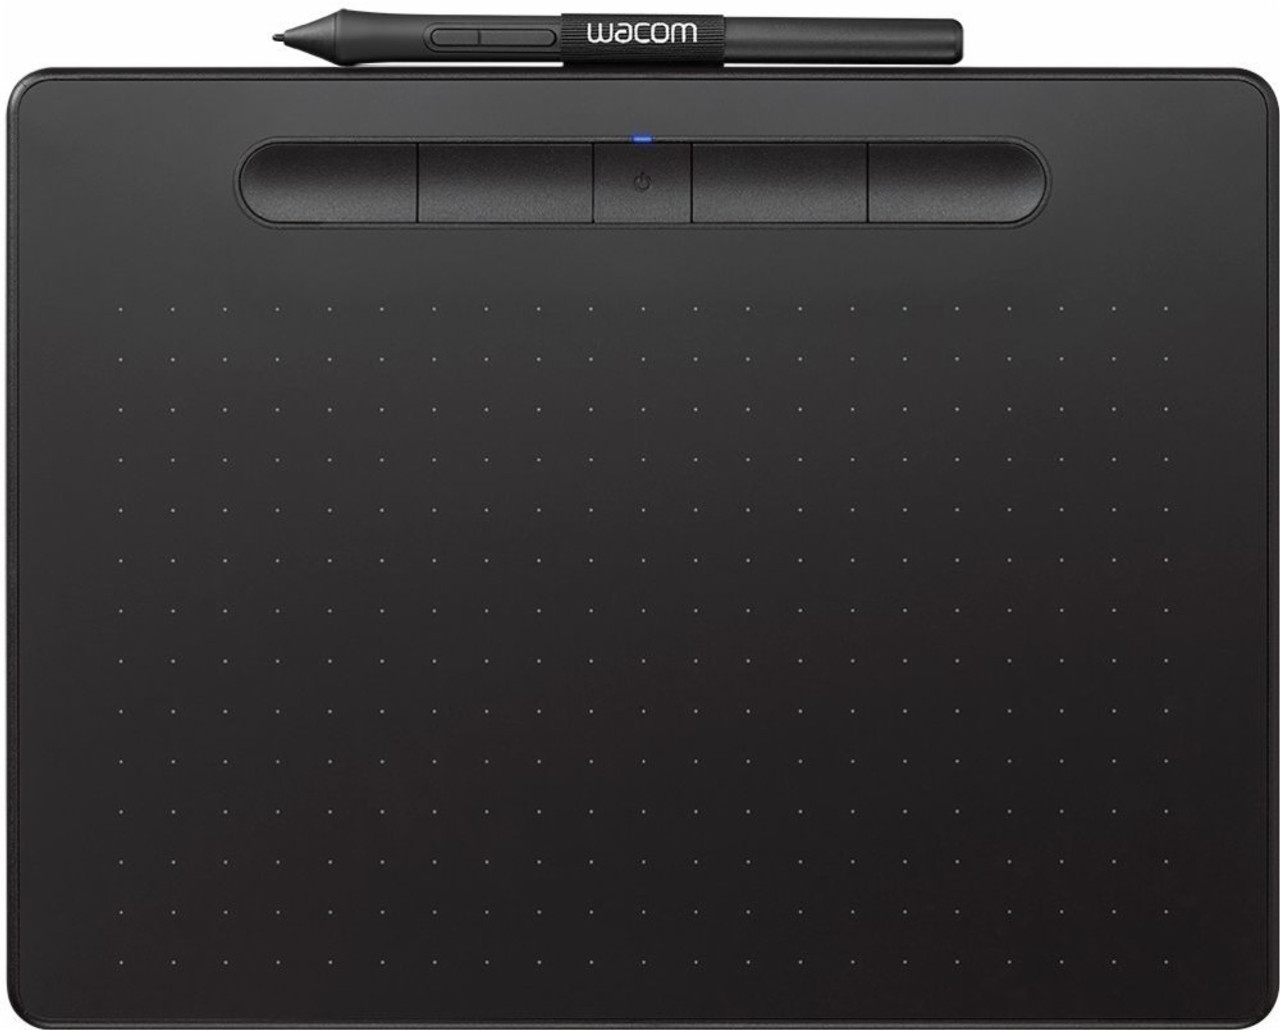 Wacom - Intuos Wireless Graphic Tablet (Medium) with 3 Bonus Software included - Black